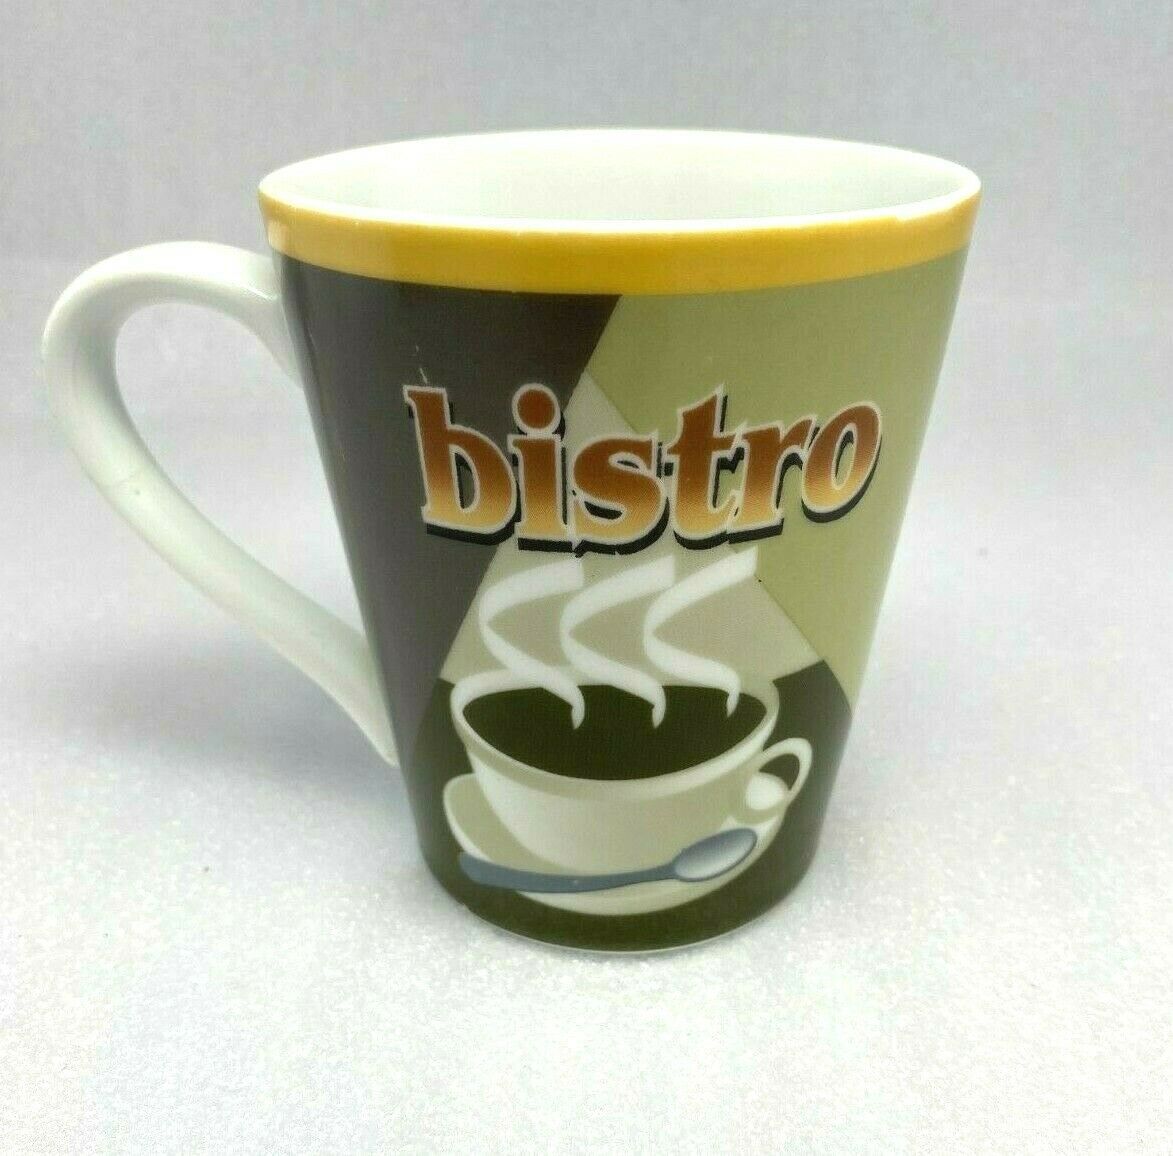 BOSTON WAREHOUSE Drinkware Ceramic Bistro Coffee Mug Collection 2004 - $13.86 - $14.84